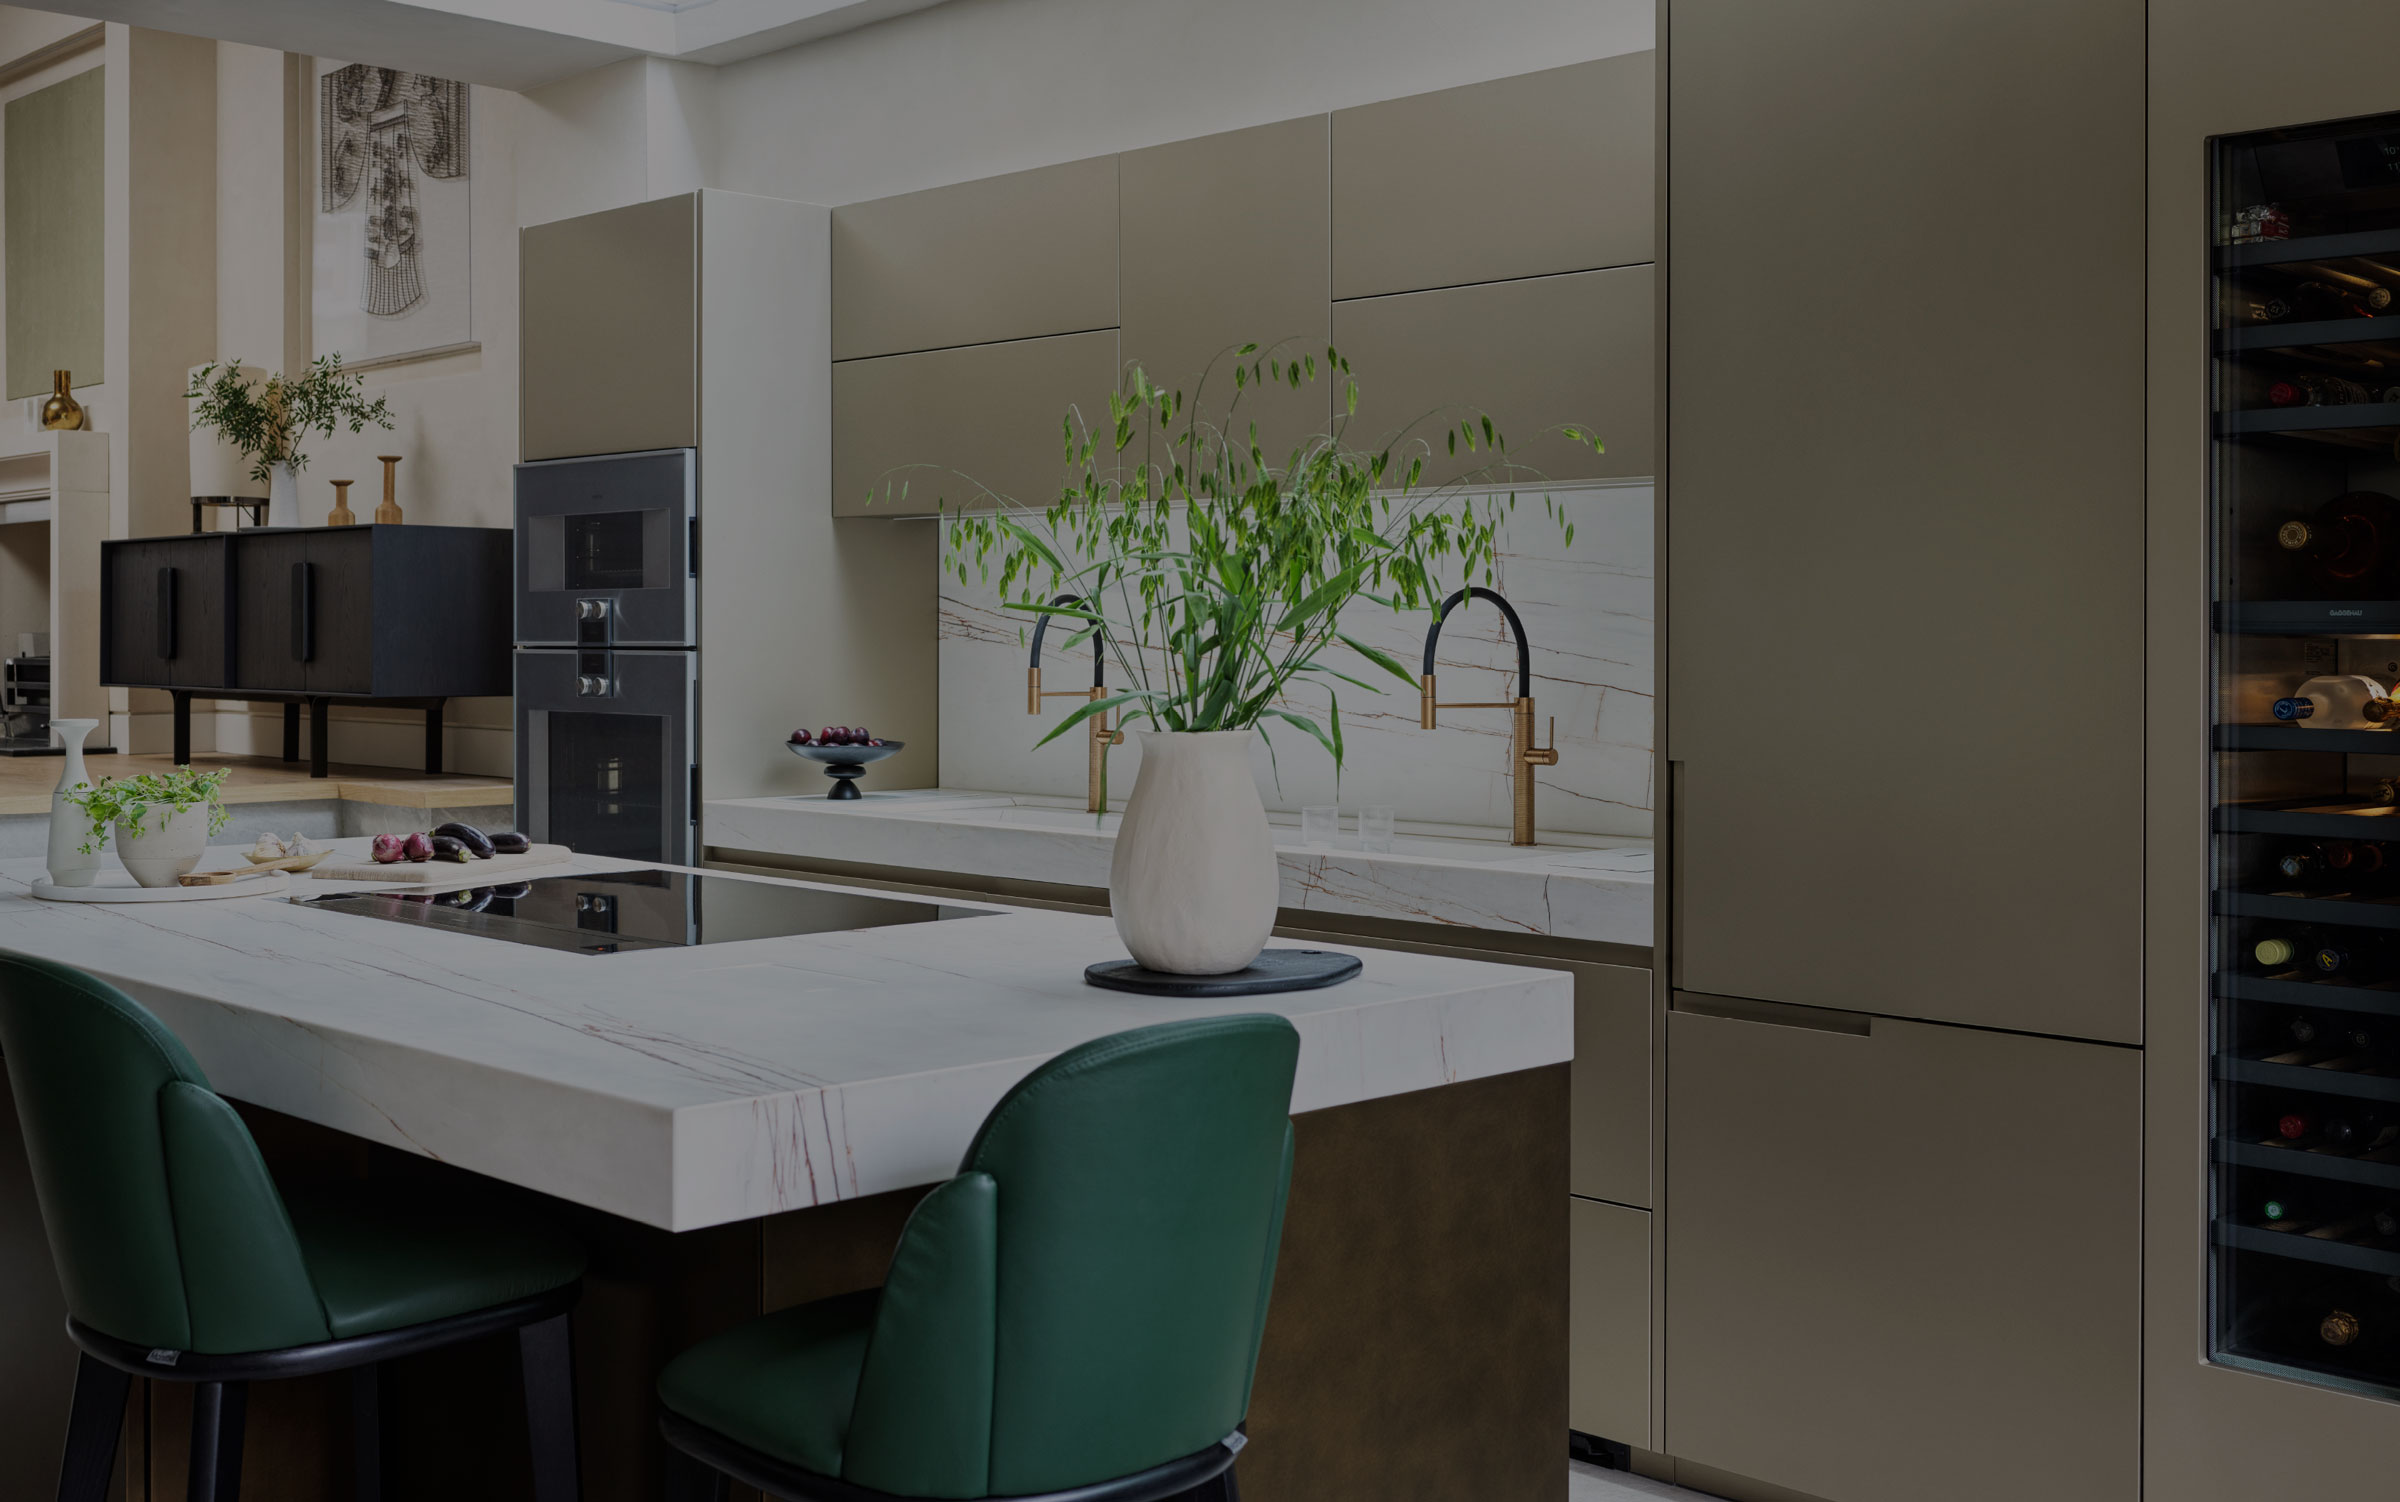 Fontana Arundel Terrace kitchen video | Design as Art | interior architectural design studio